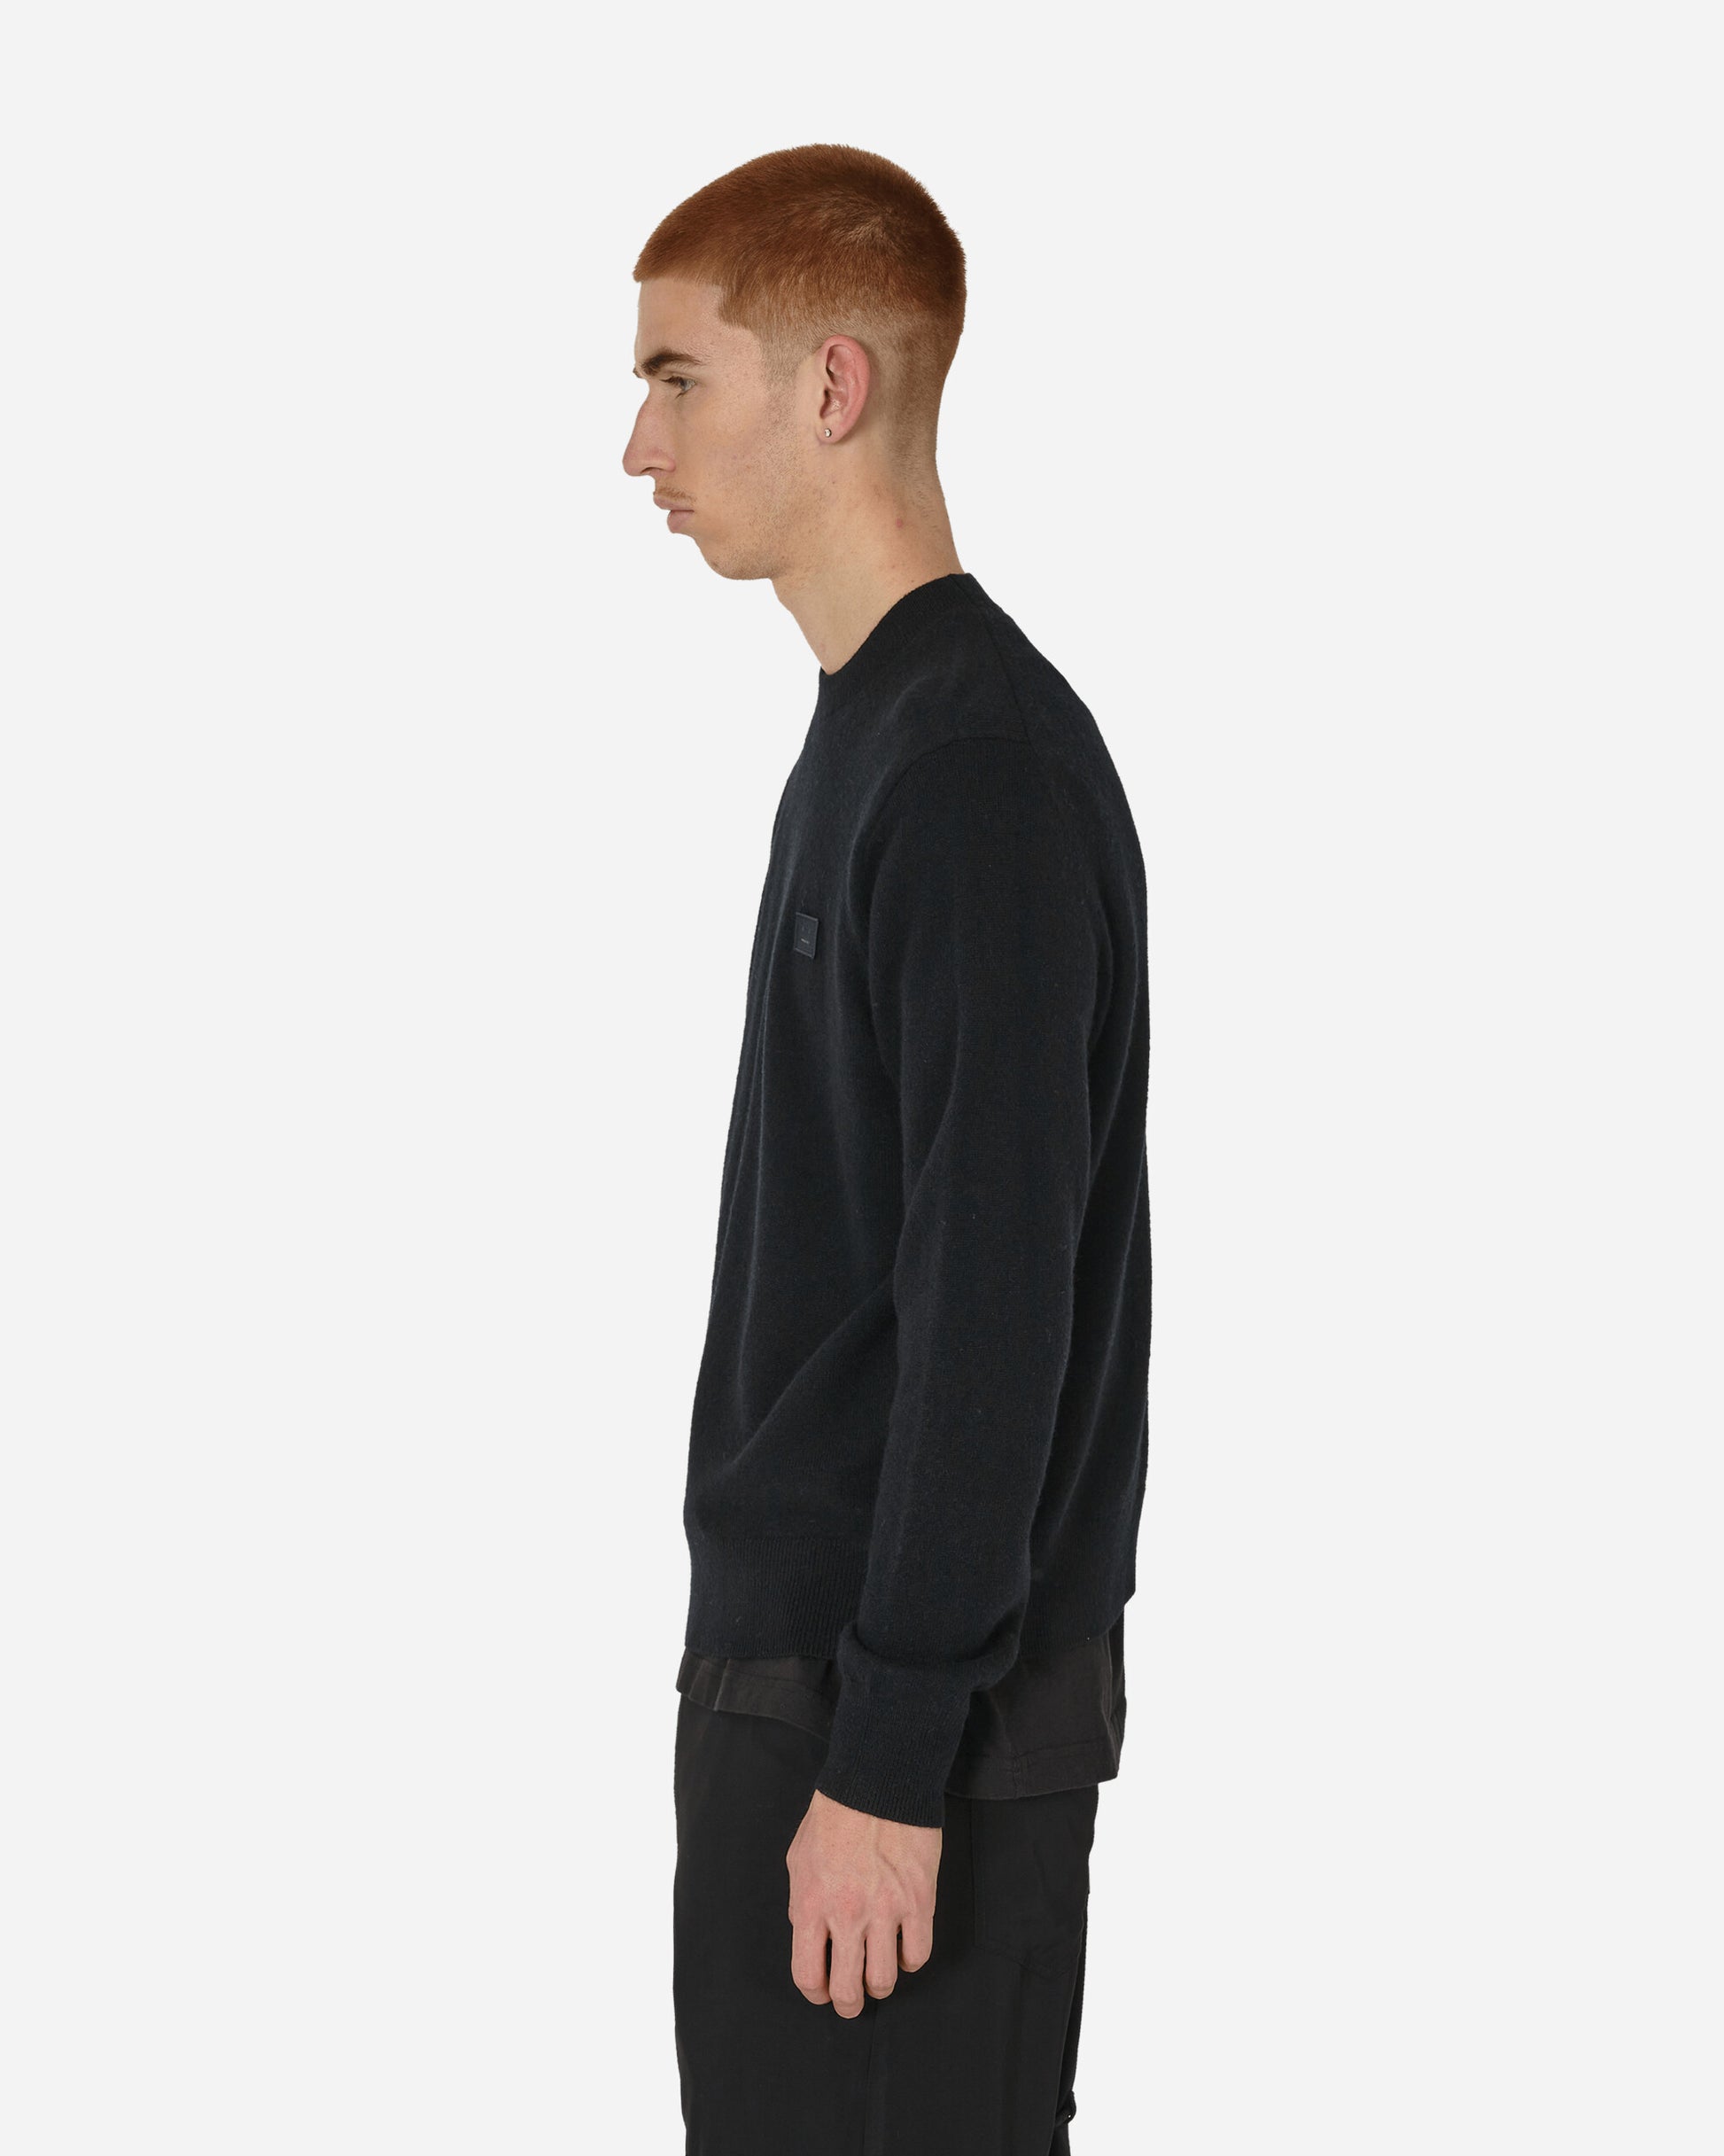 Acne Studios Crewneck Sweater Black Knitwears Sweaters C60042- 900